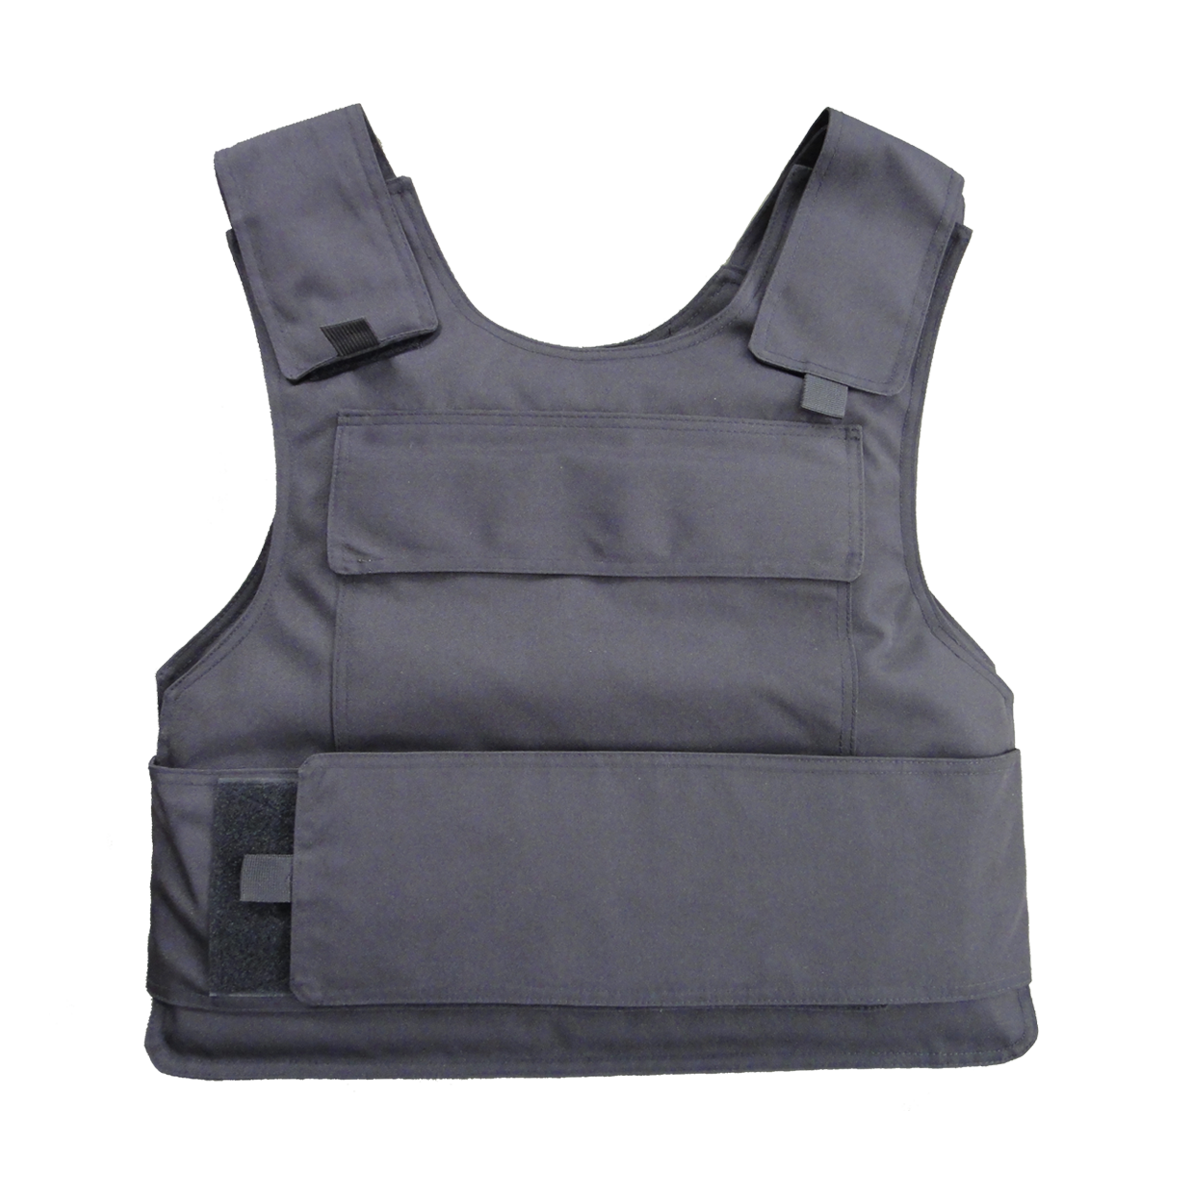 Black Military Bulletproof Vest PNG High-Quality Image